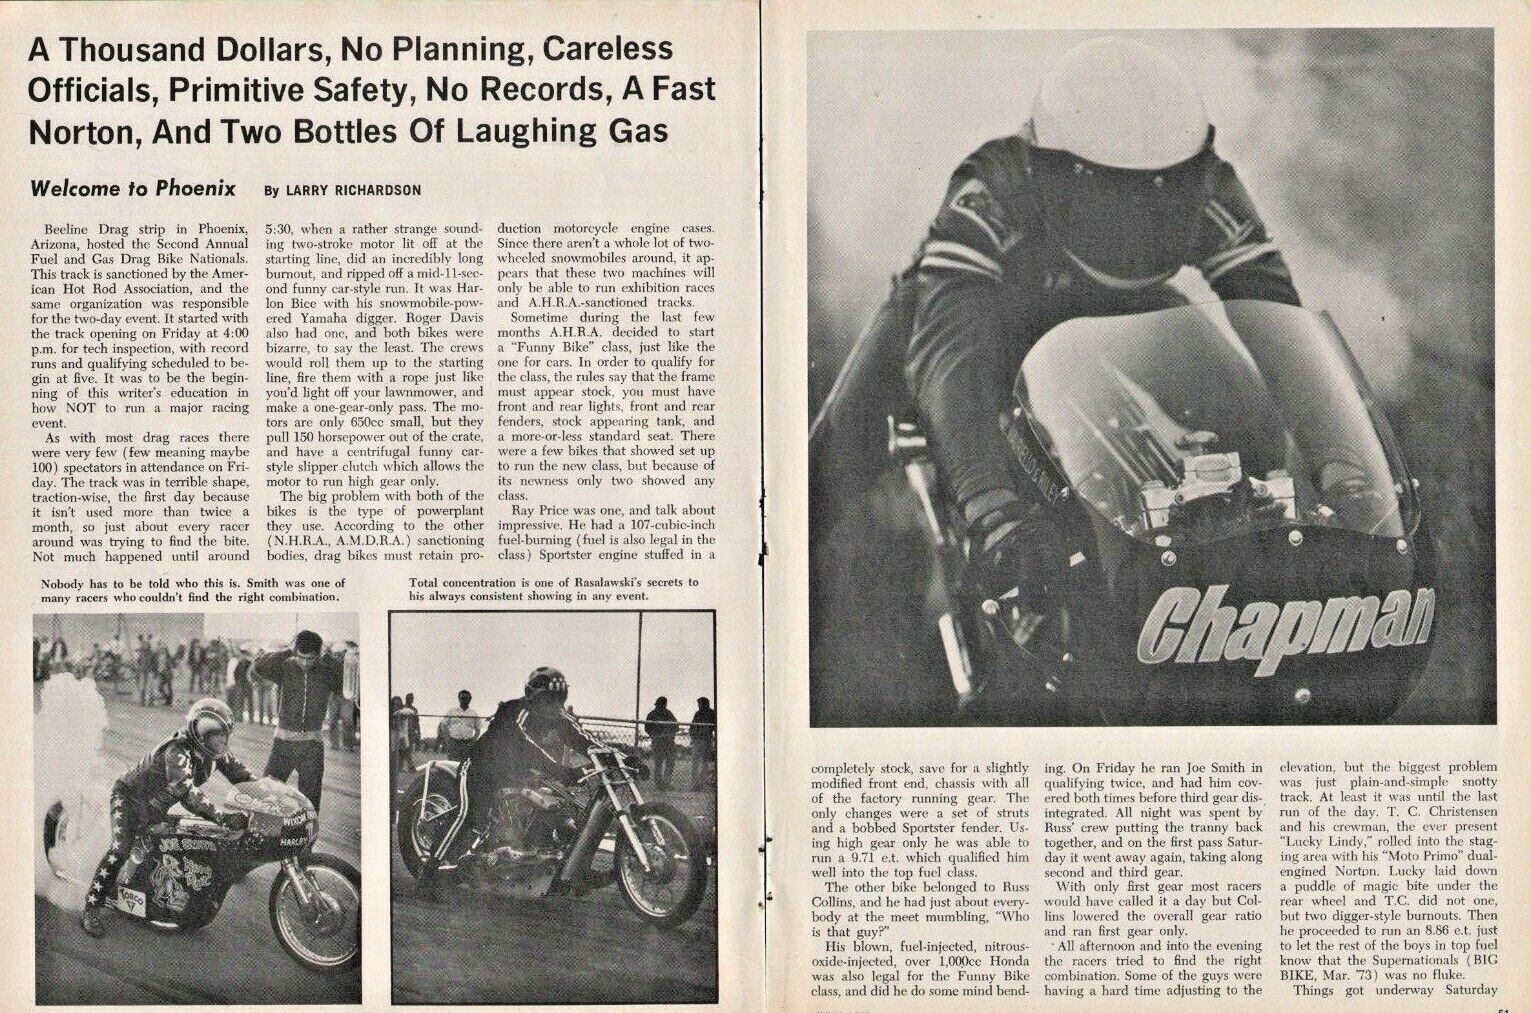 1973 Phoenix Arizona Beeline Motorcycle Drag Racing Strip 8-Page Vintage Article